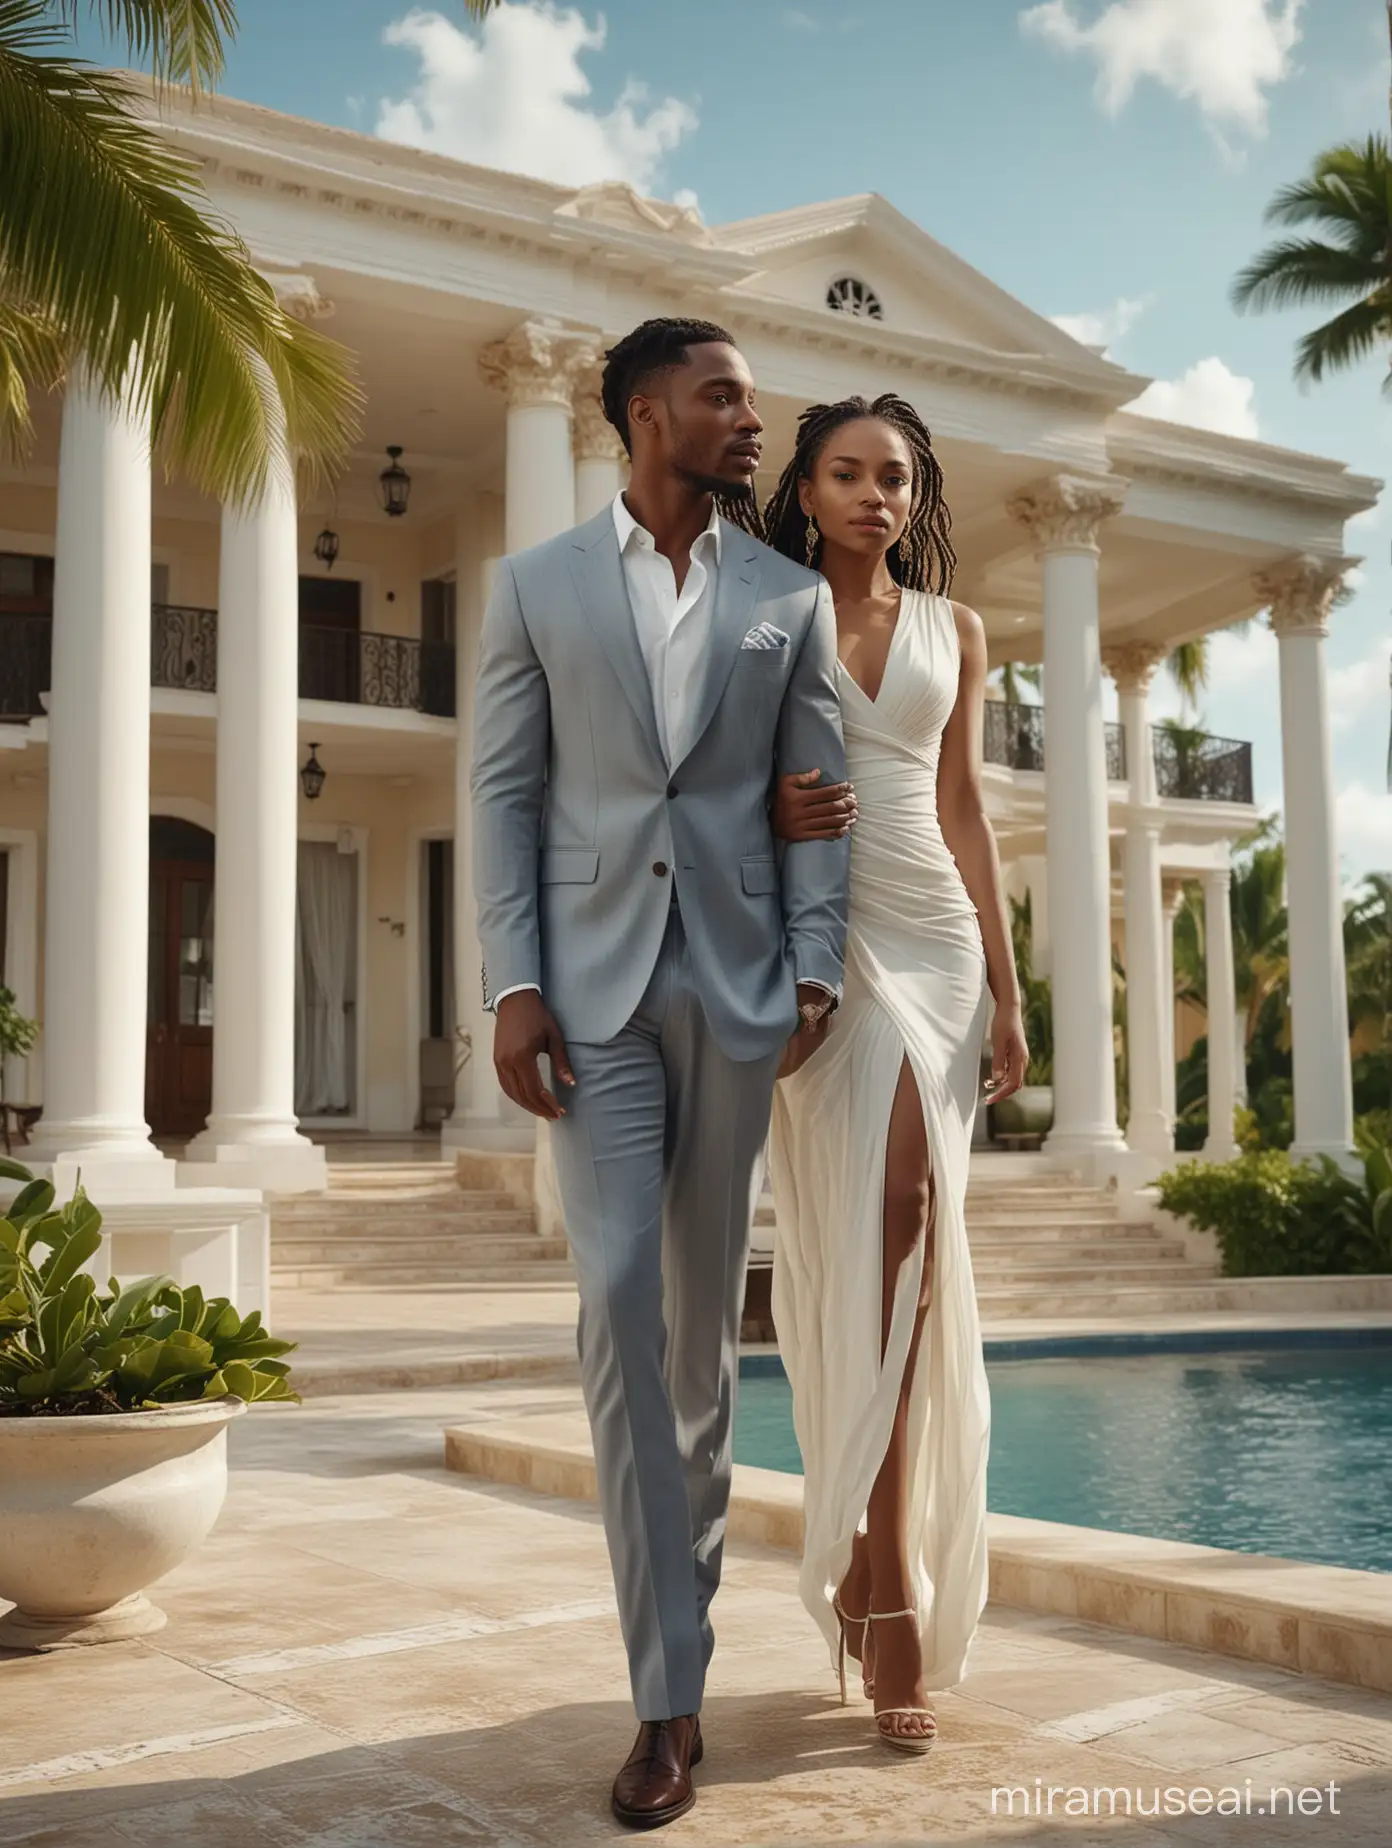 Elegant Caribbean Couple in Luxurious Surroundings